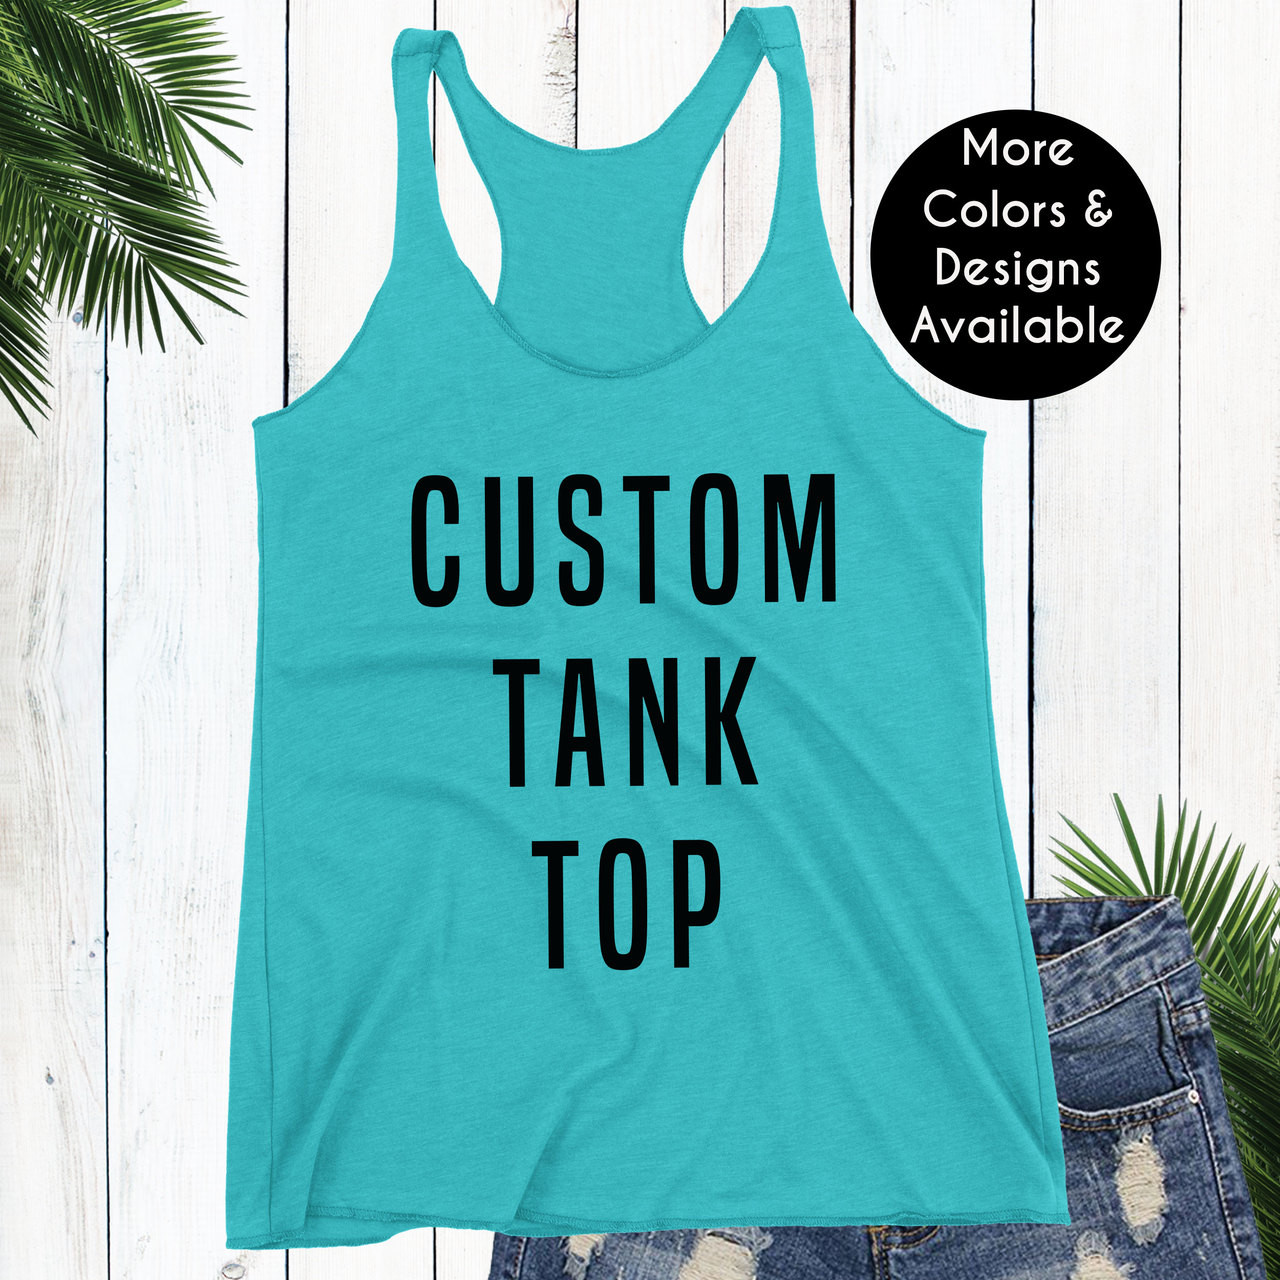 Your Own: Custom Tank Top